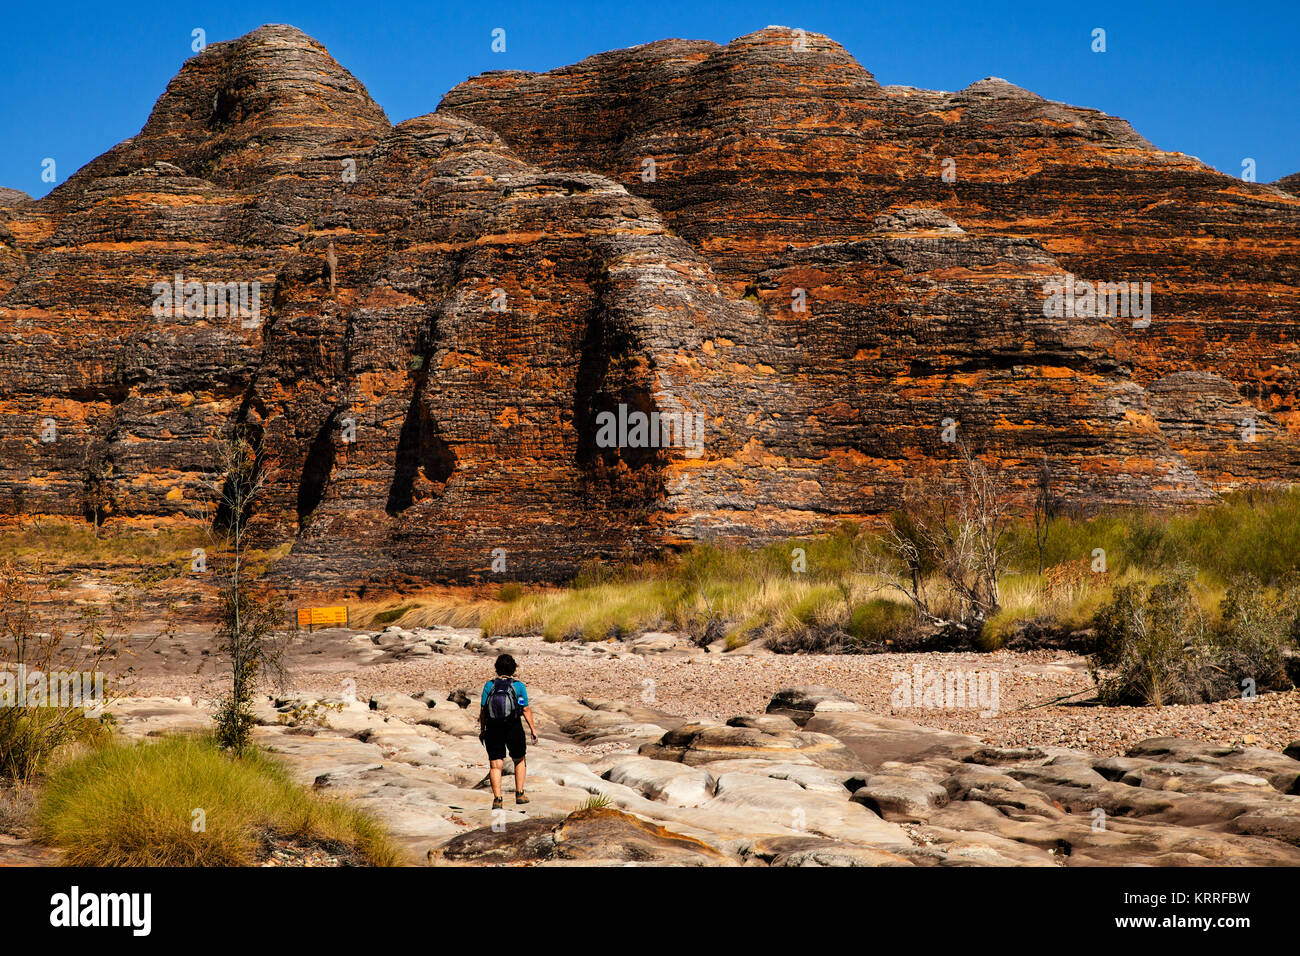 Die atemberaubende Landschaft der Bienenstock wie Sandstein Formationen ist atemberaubend, Bungle Bungles, Purnululu National Park, Australien Stockfoto